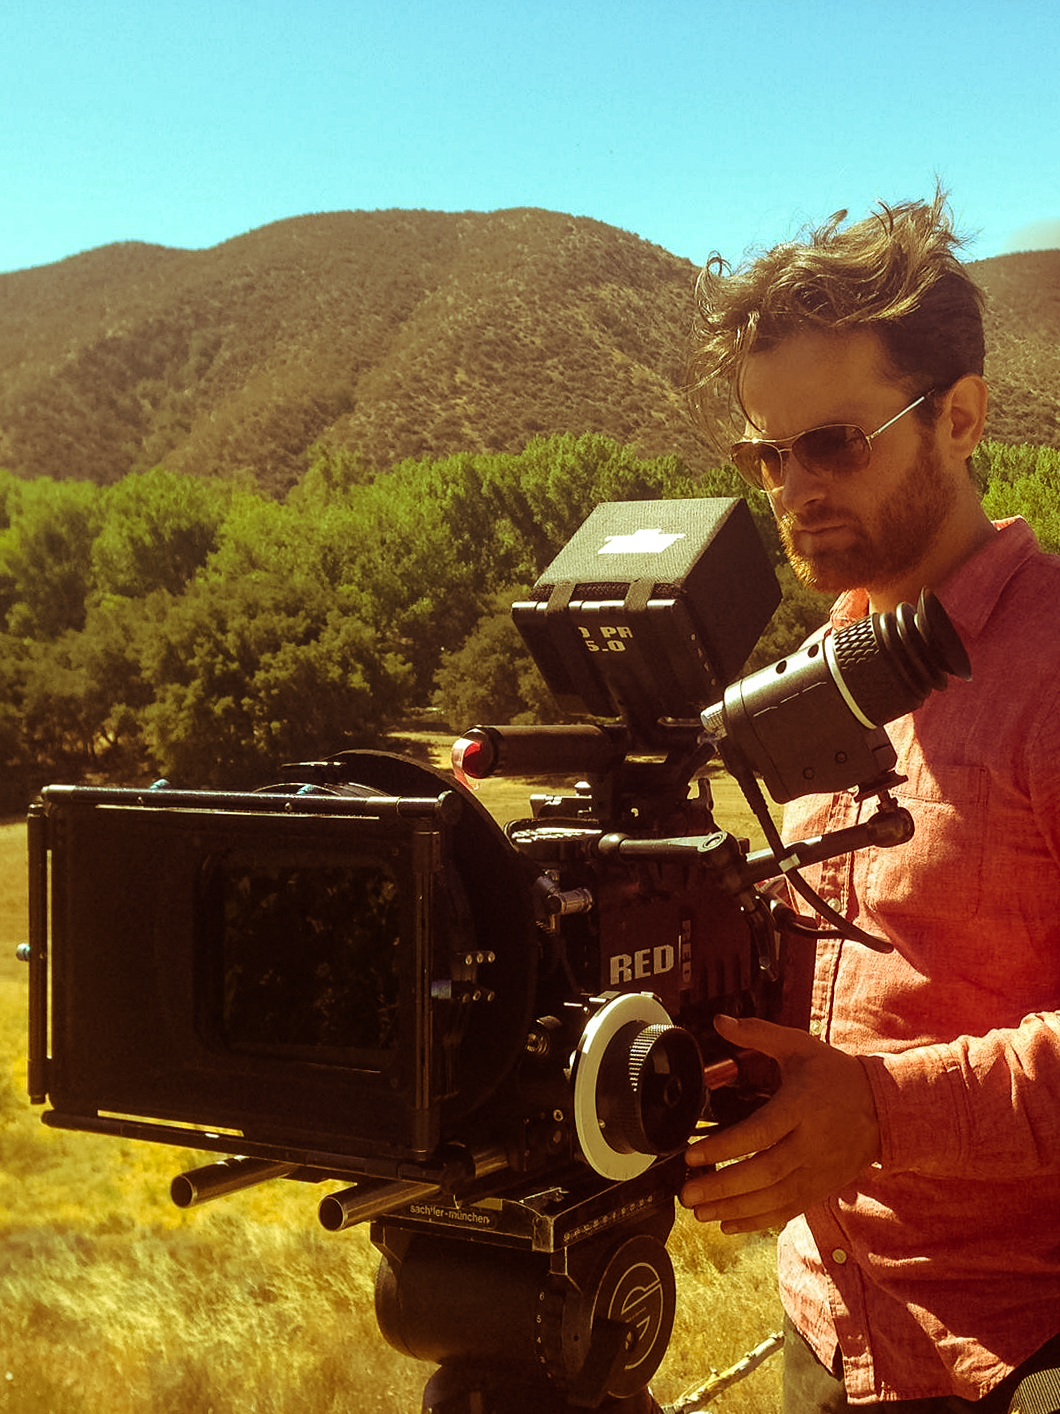 Cristian D. Coldea as a Cinematographer